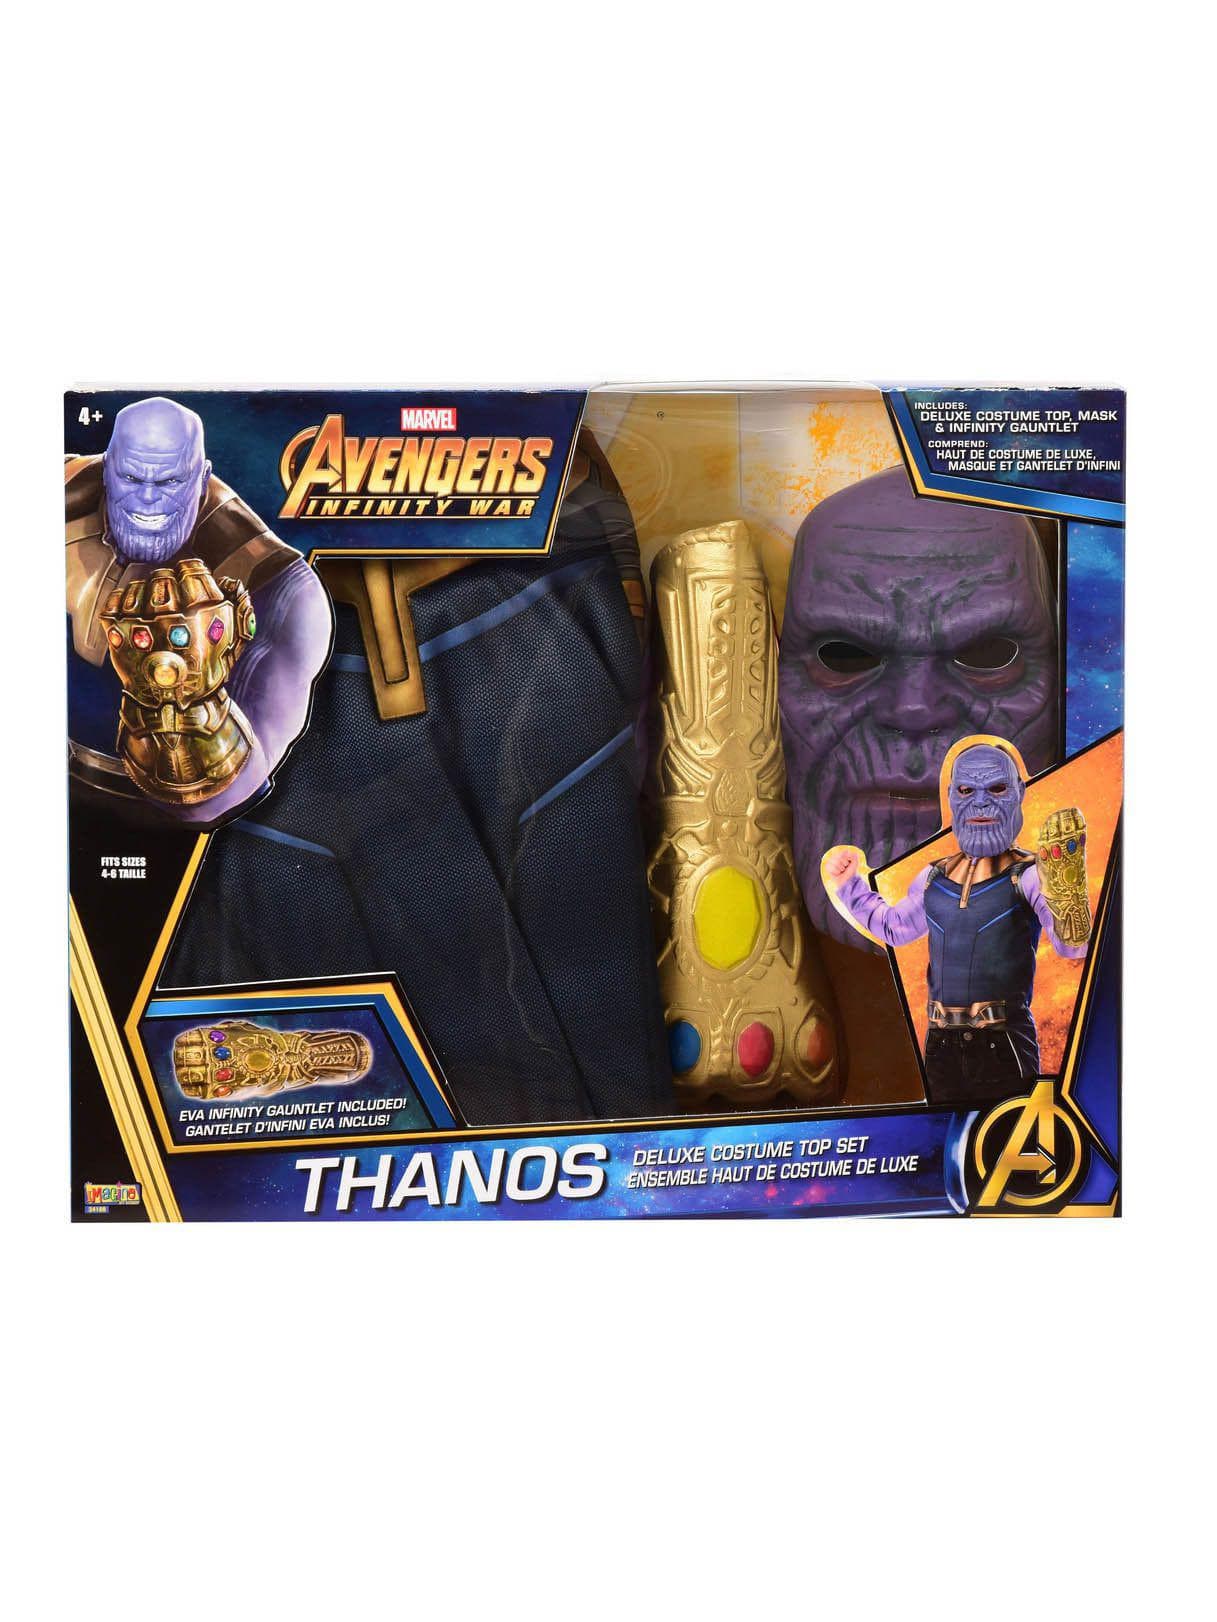 Kid's Avengers Thanos Costume - costumes.com